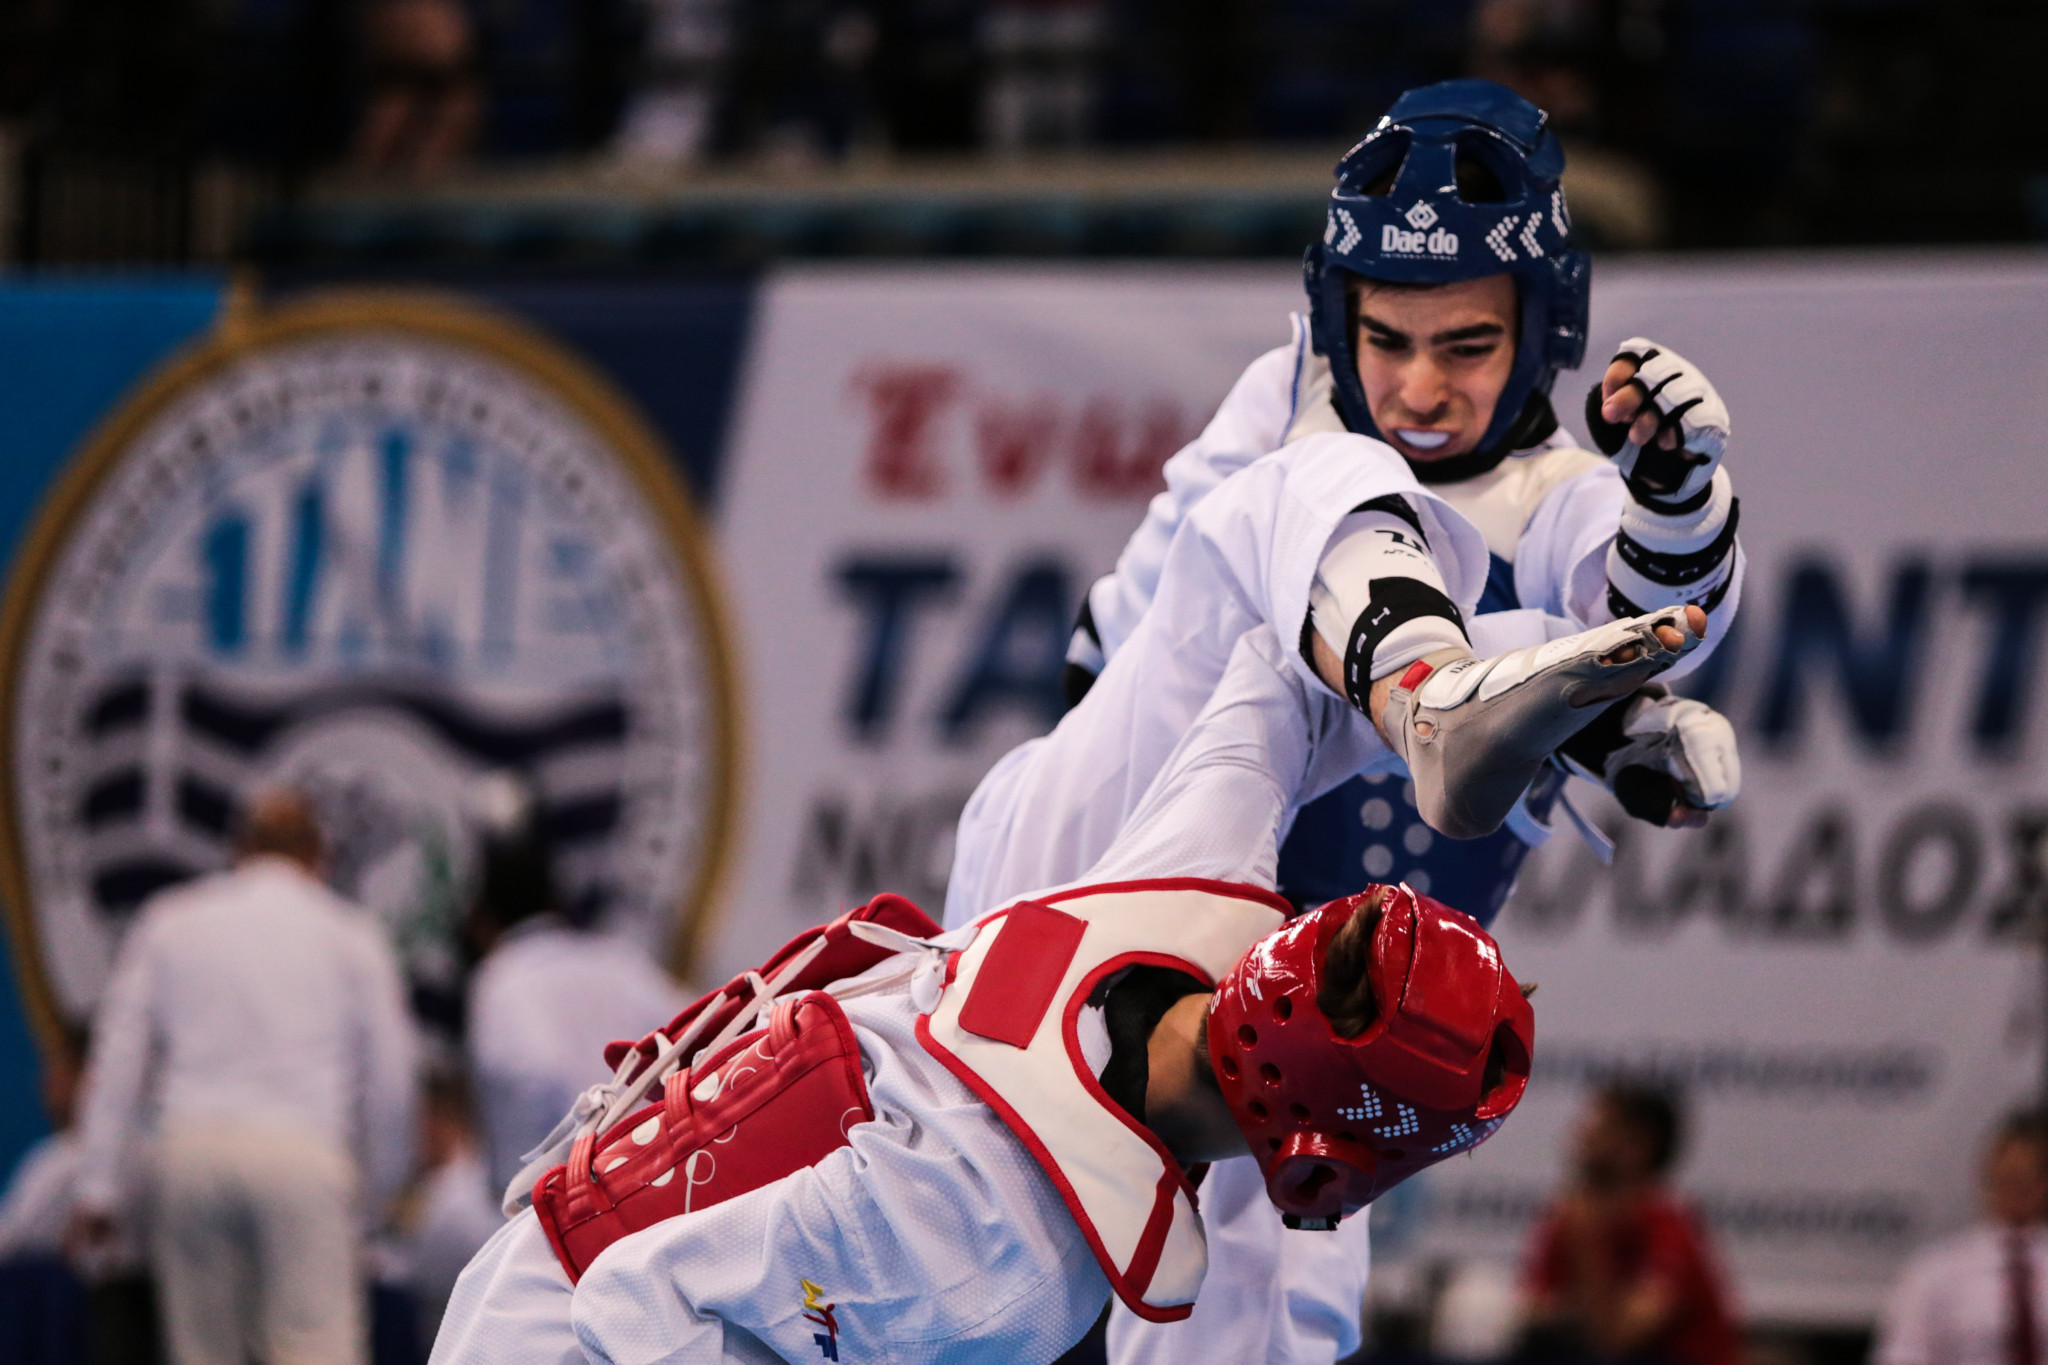 World Taewondo Europe could join a future European Championships ©WTE